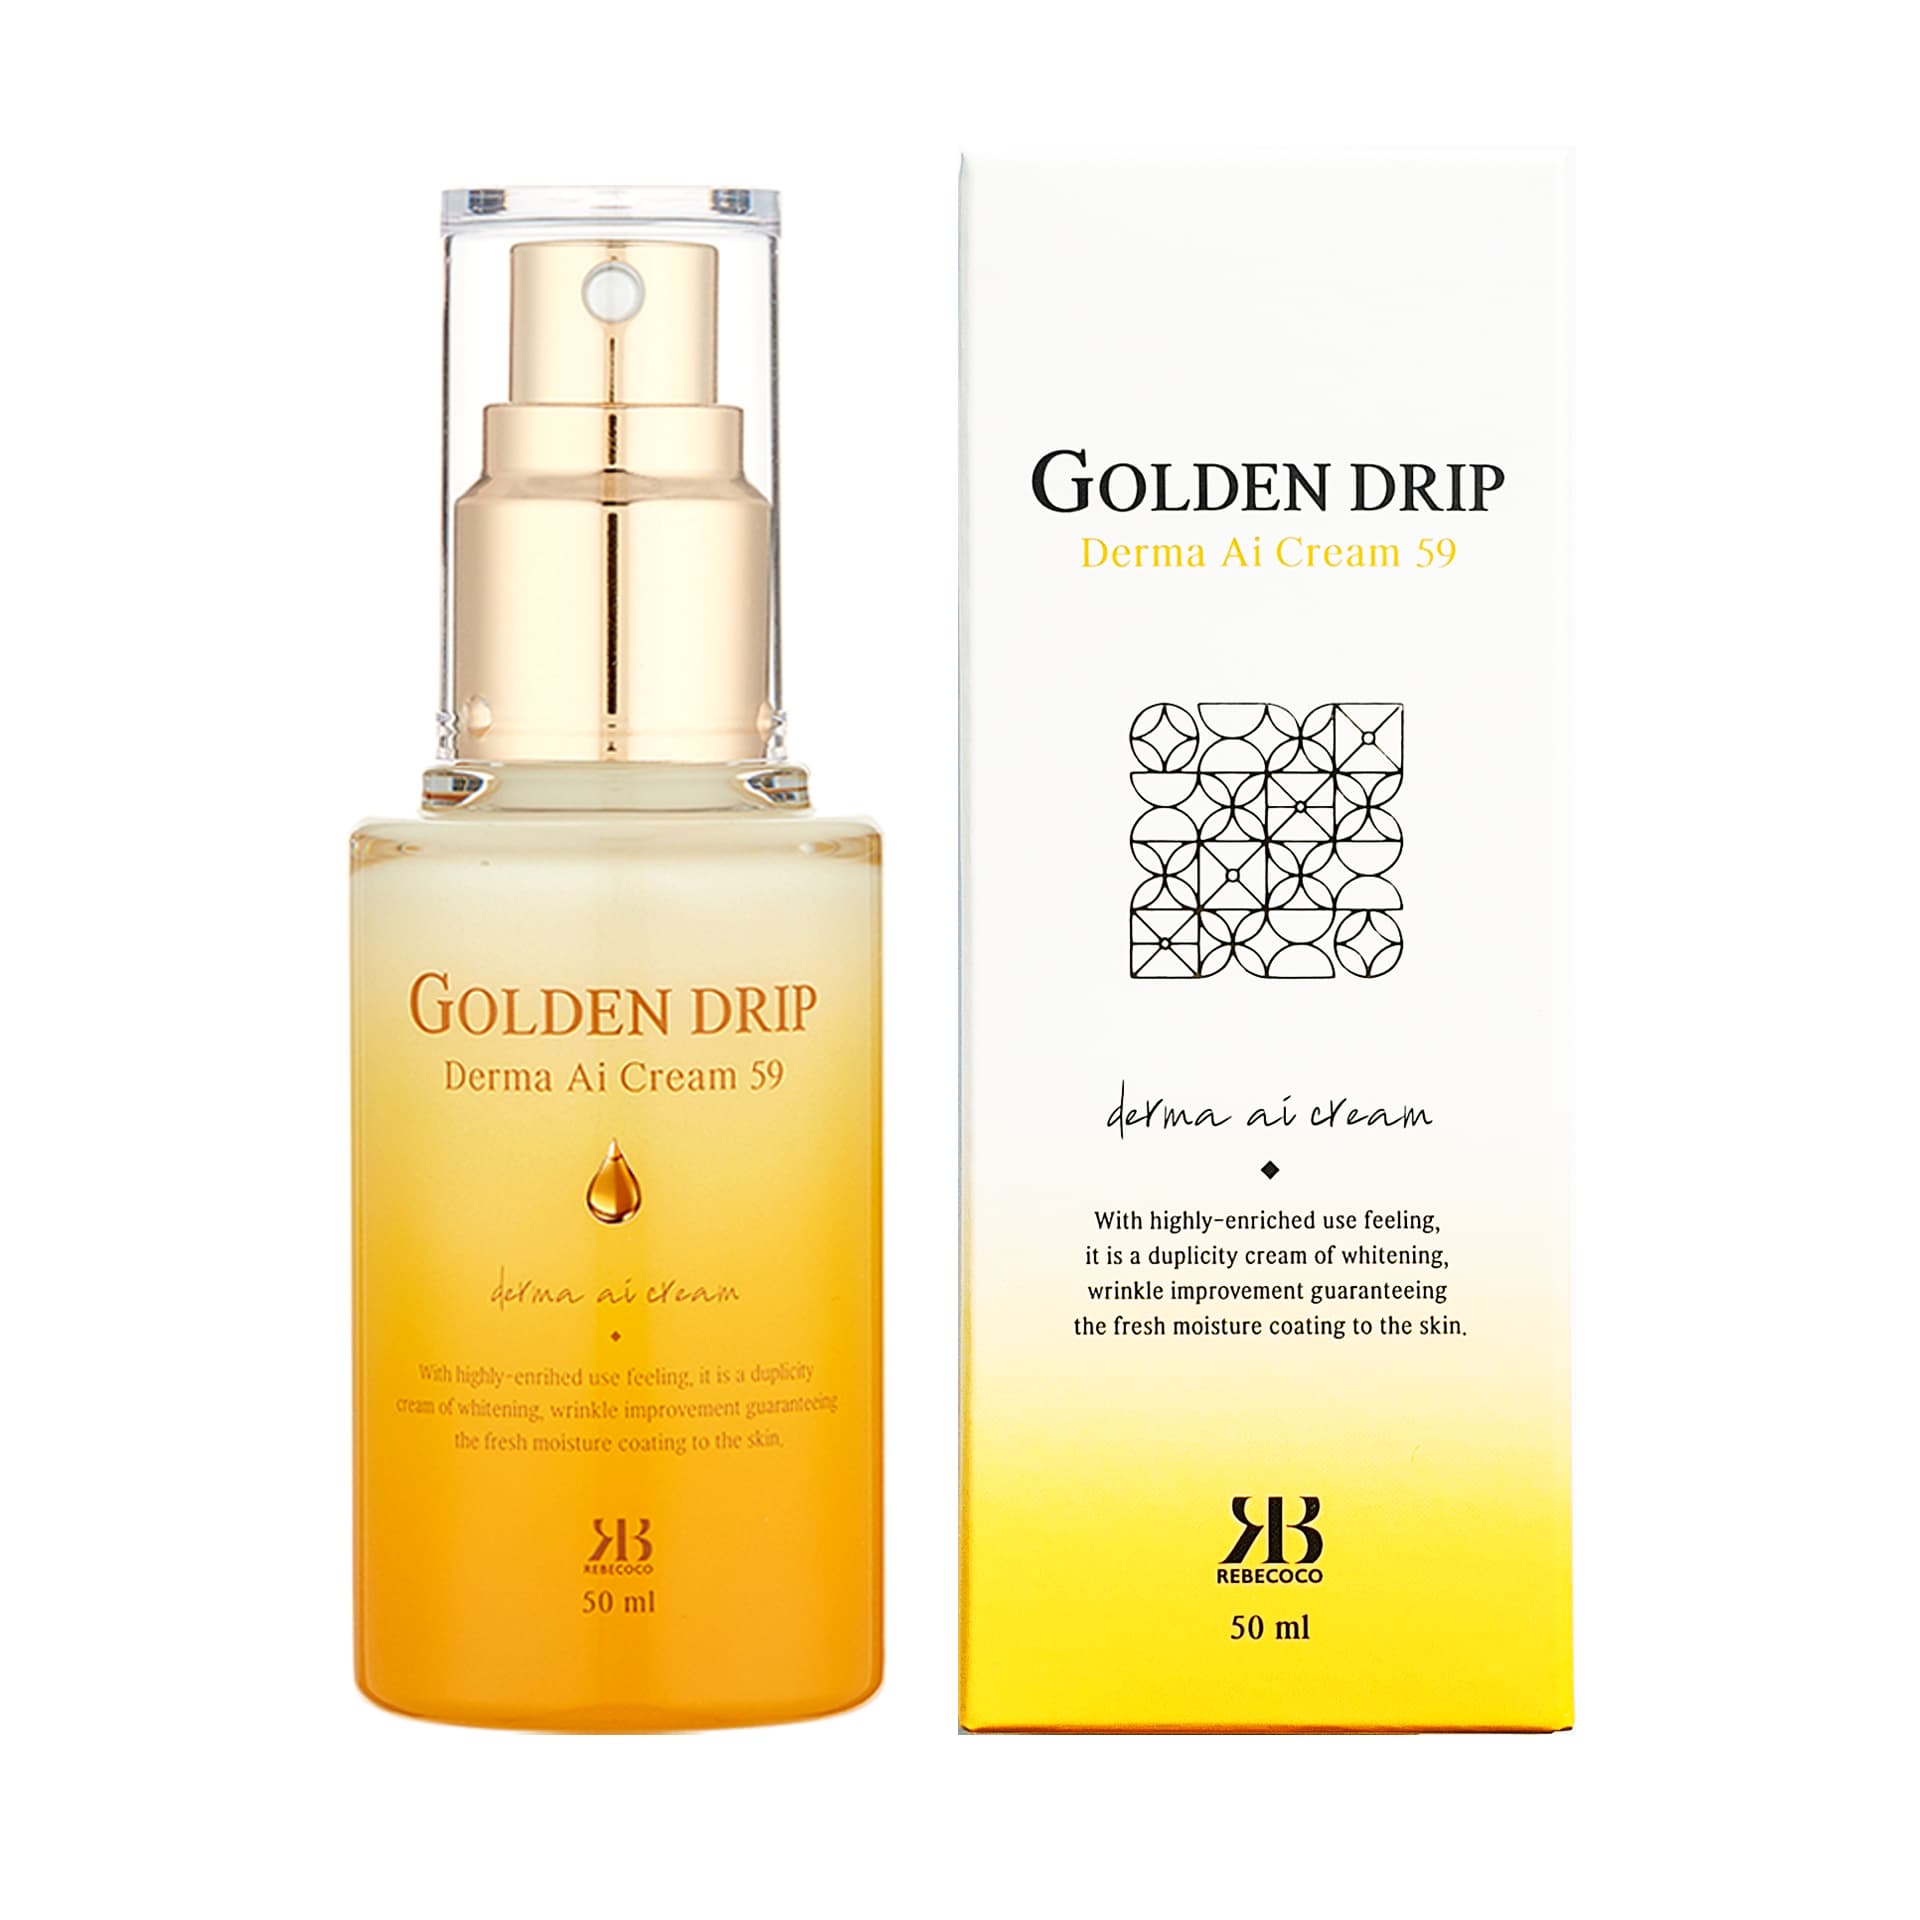 Golden Drip Derma Ai Cream 59